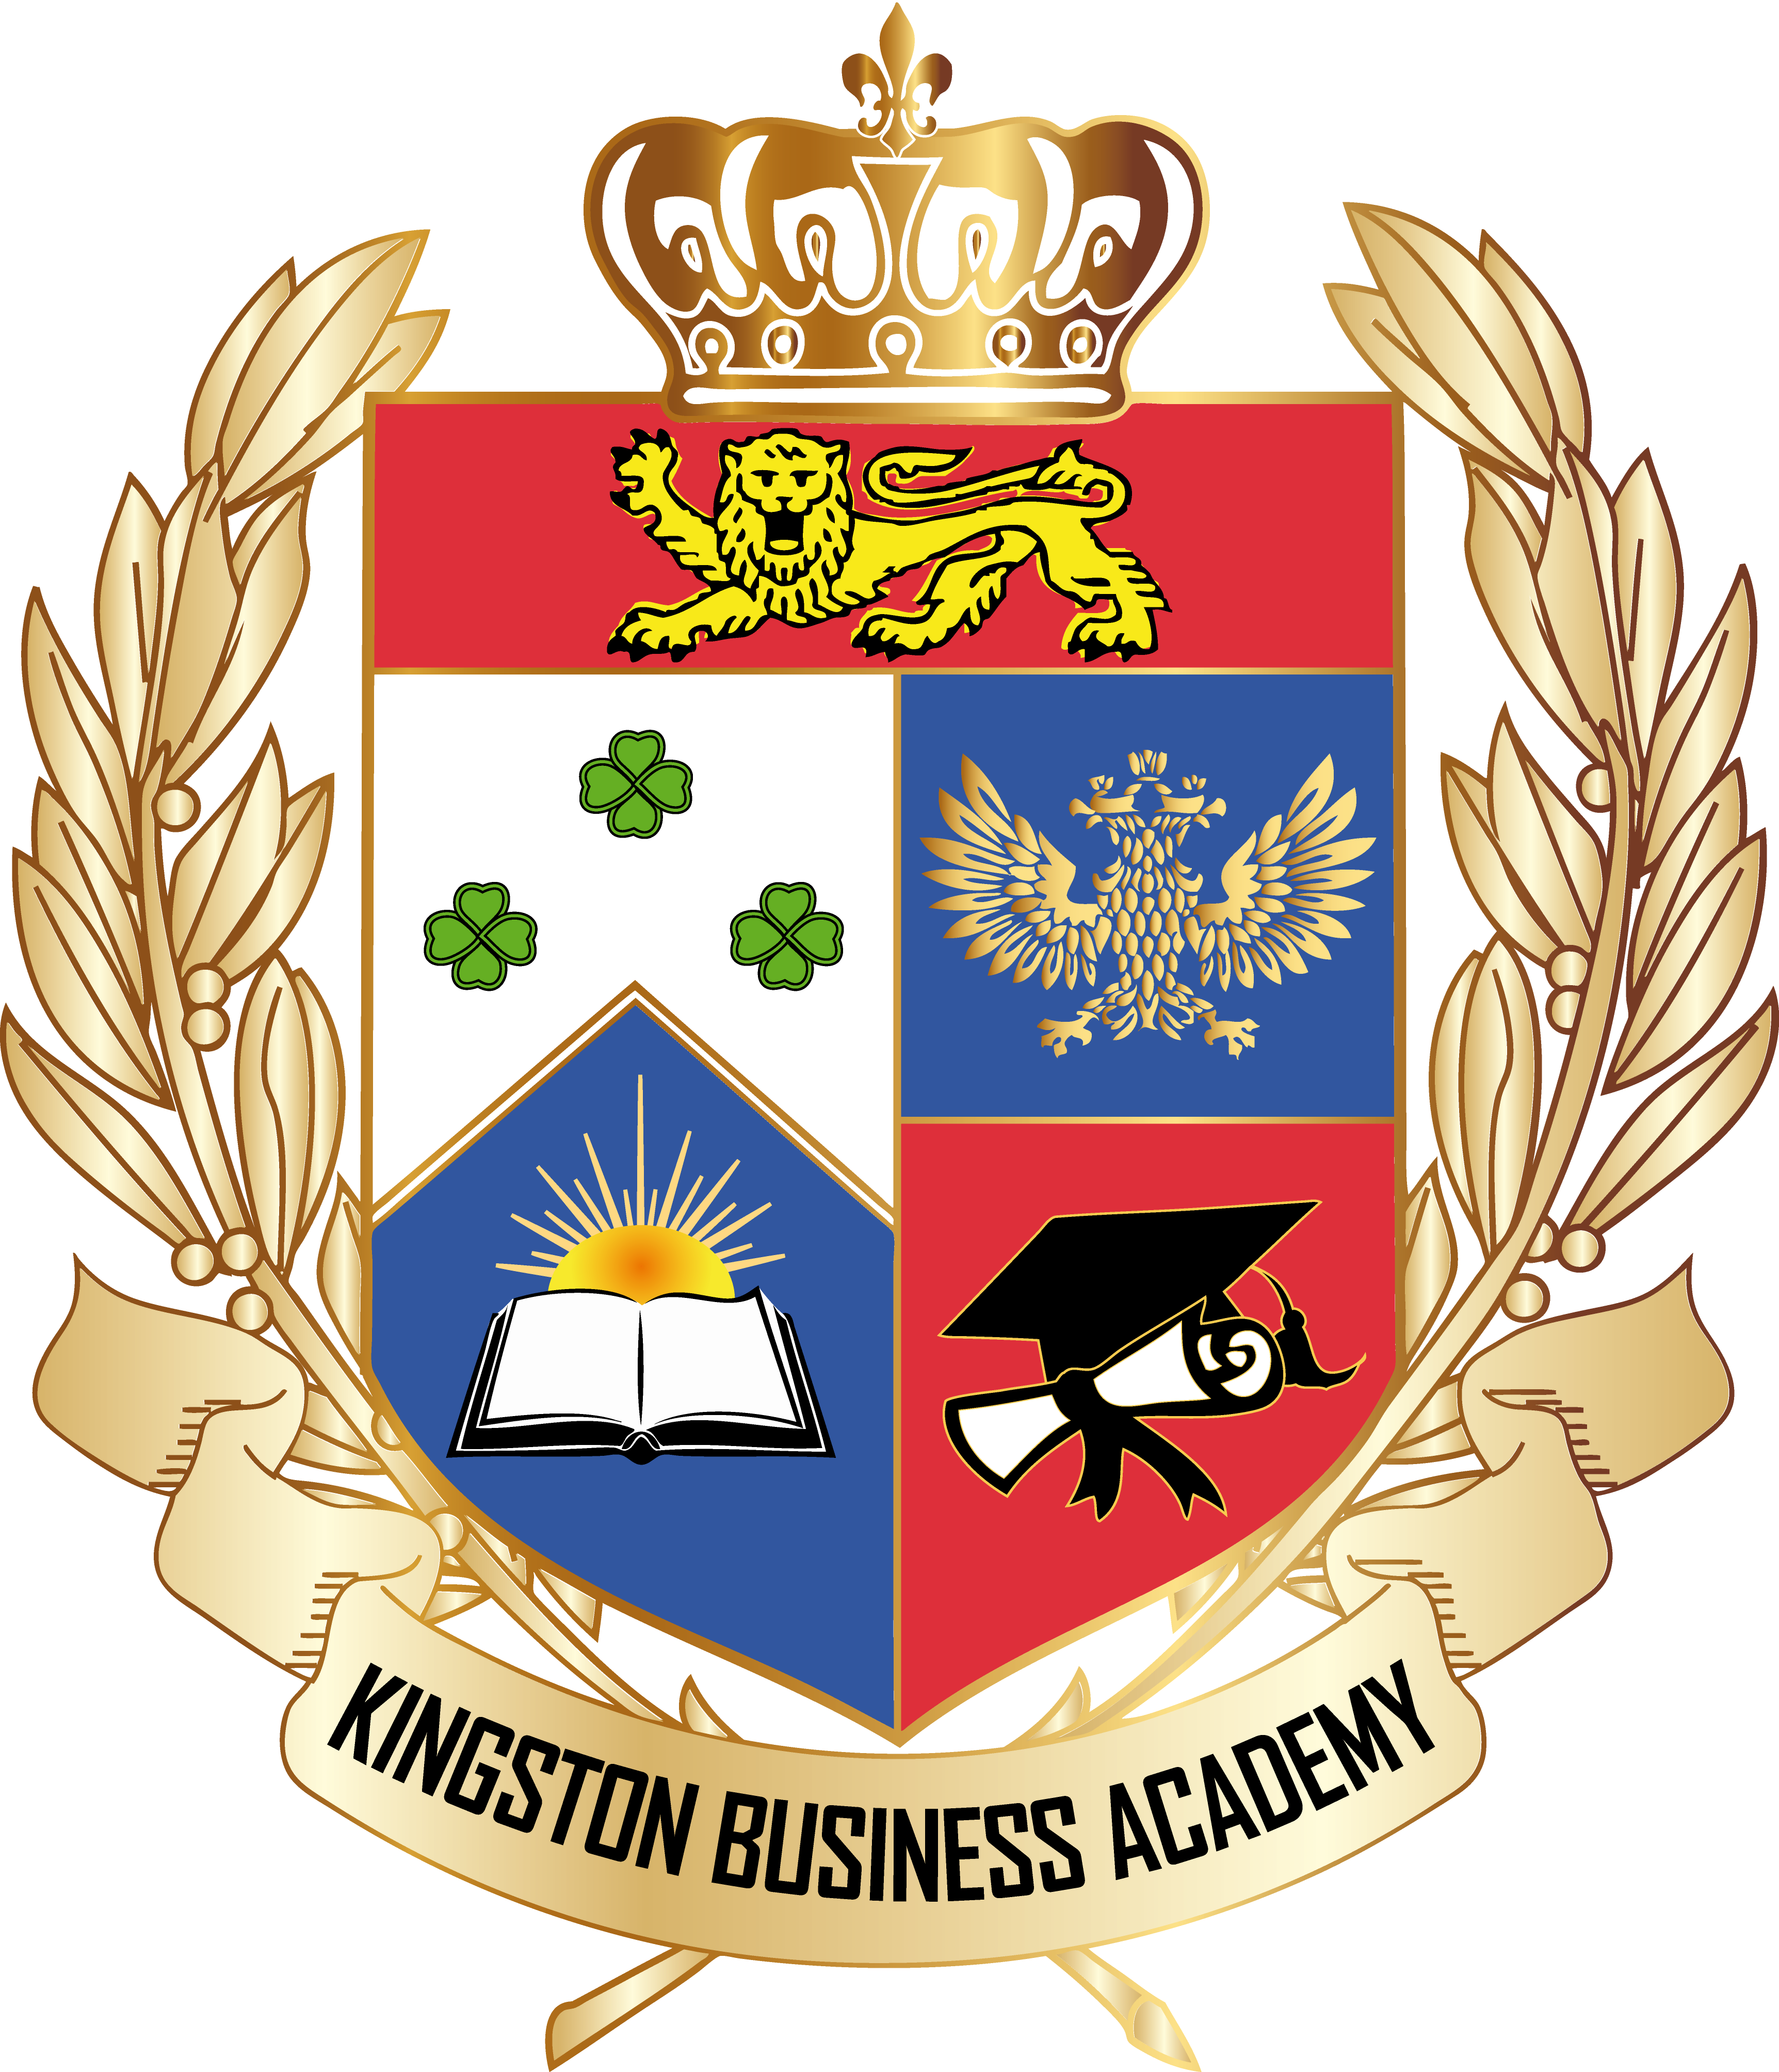 Kingston Business Academy